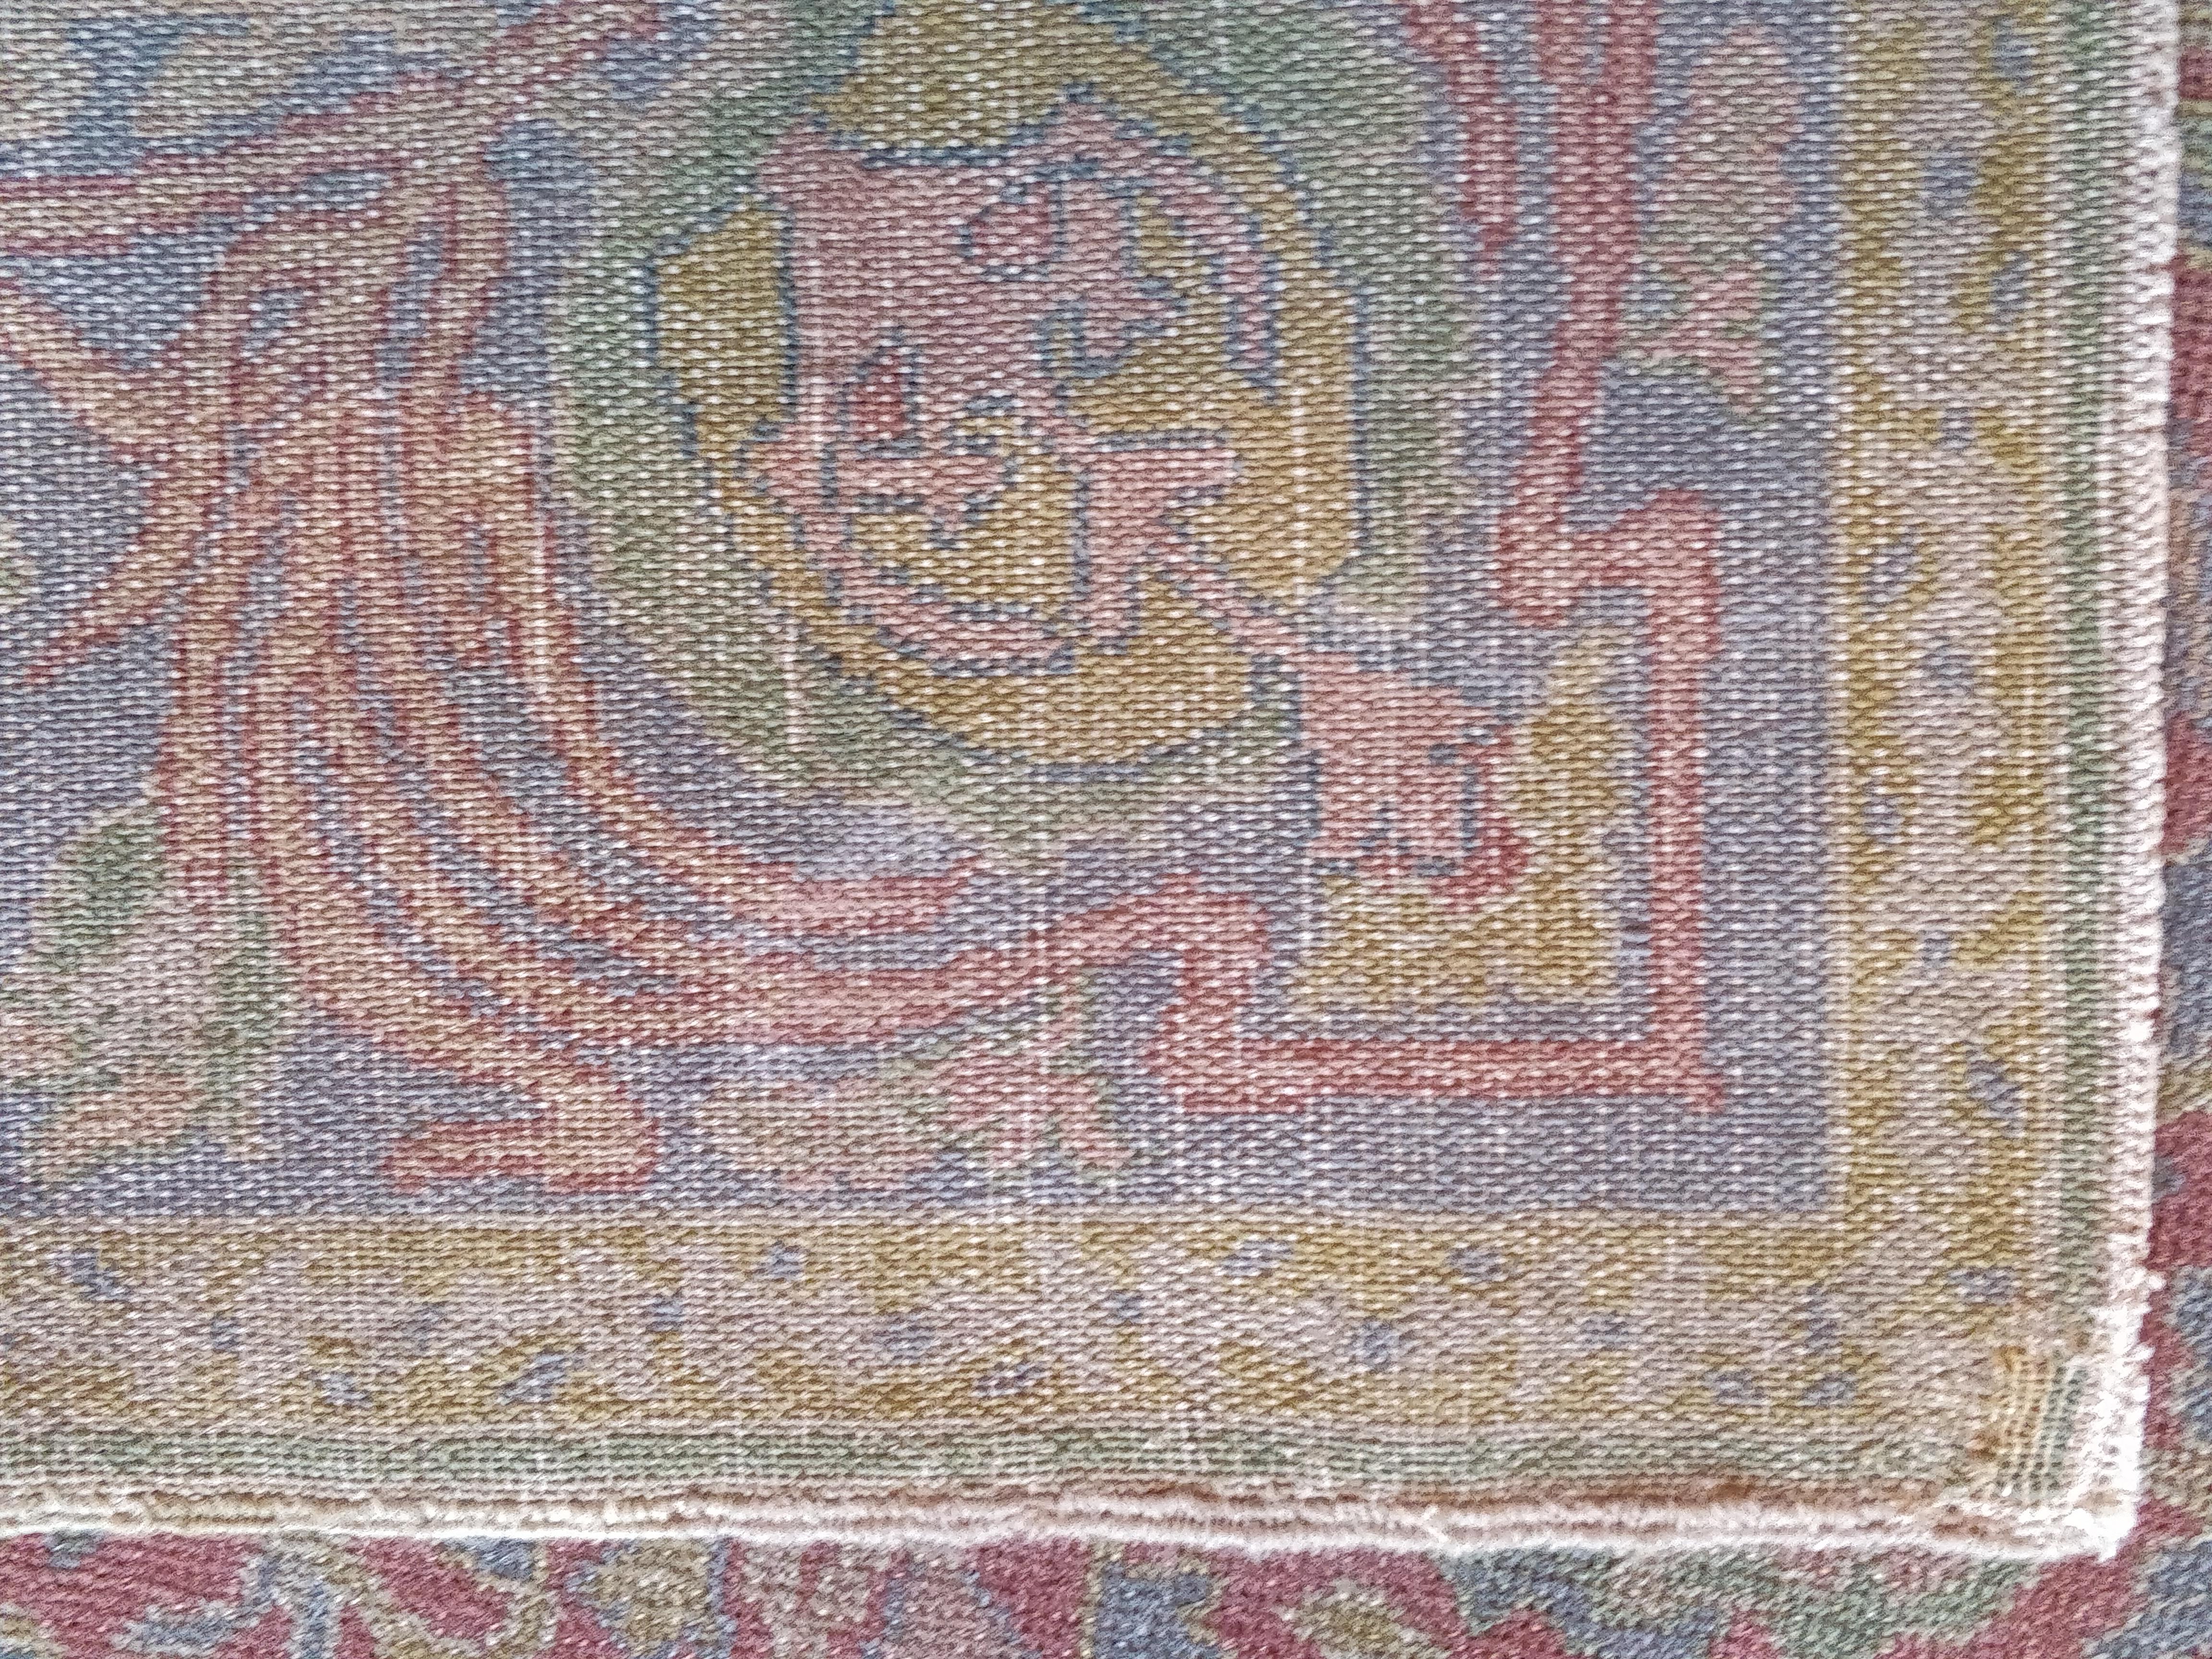 Antique Israel Bezalel Carpet with Judaica Symbols For Sale 2